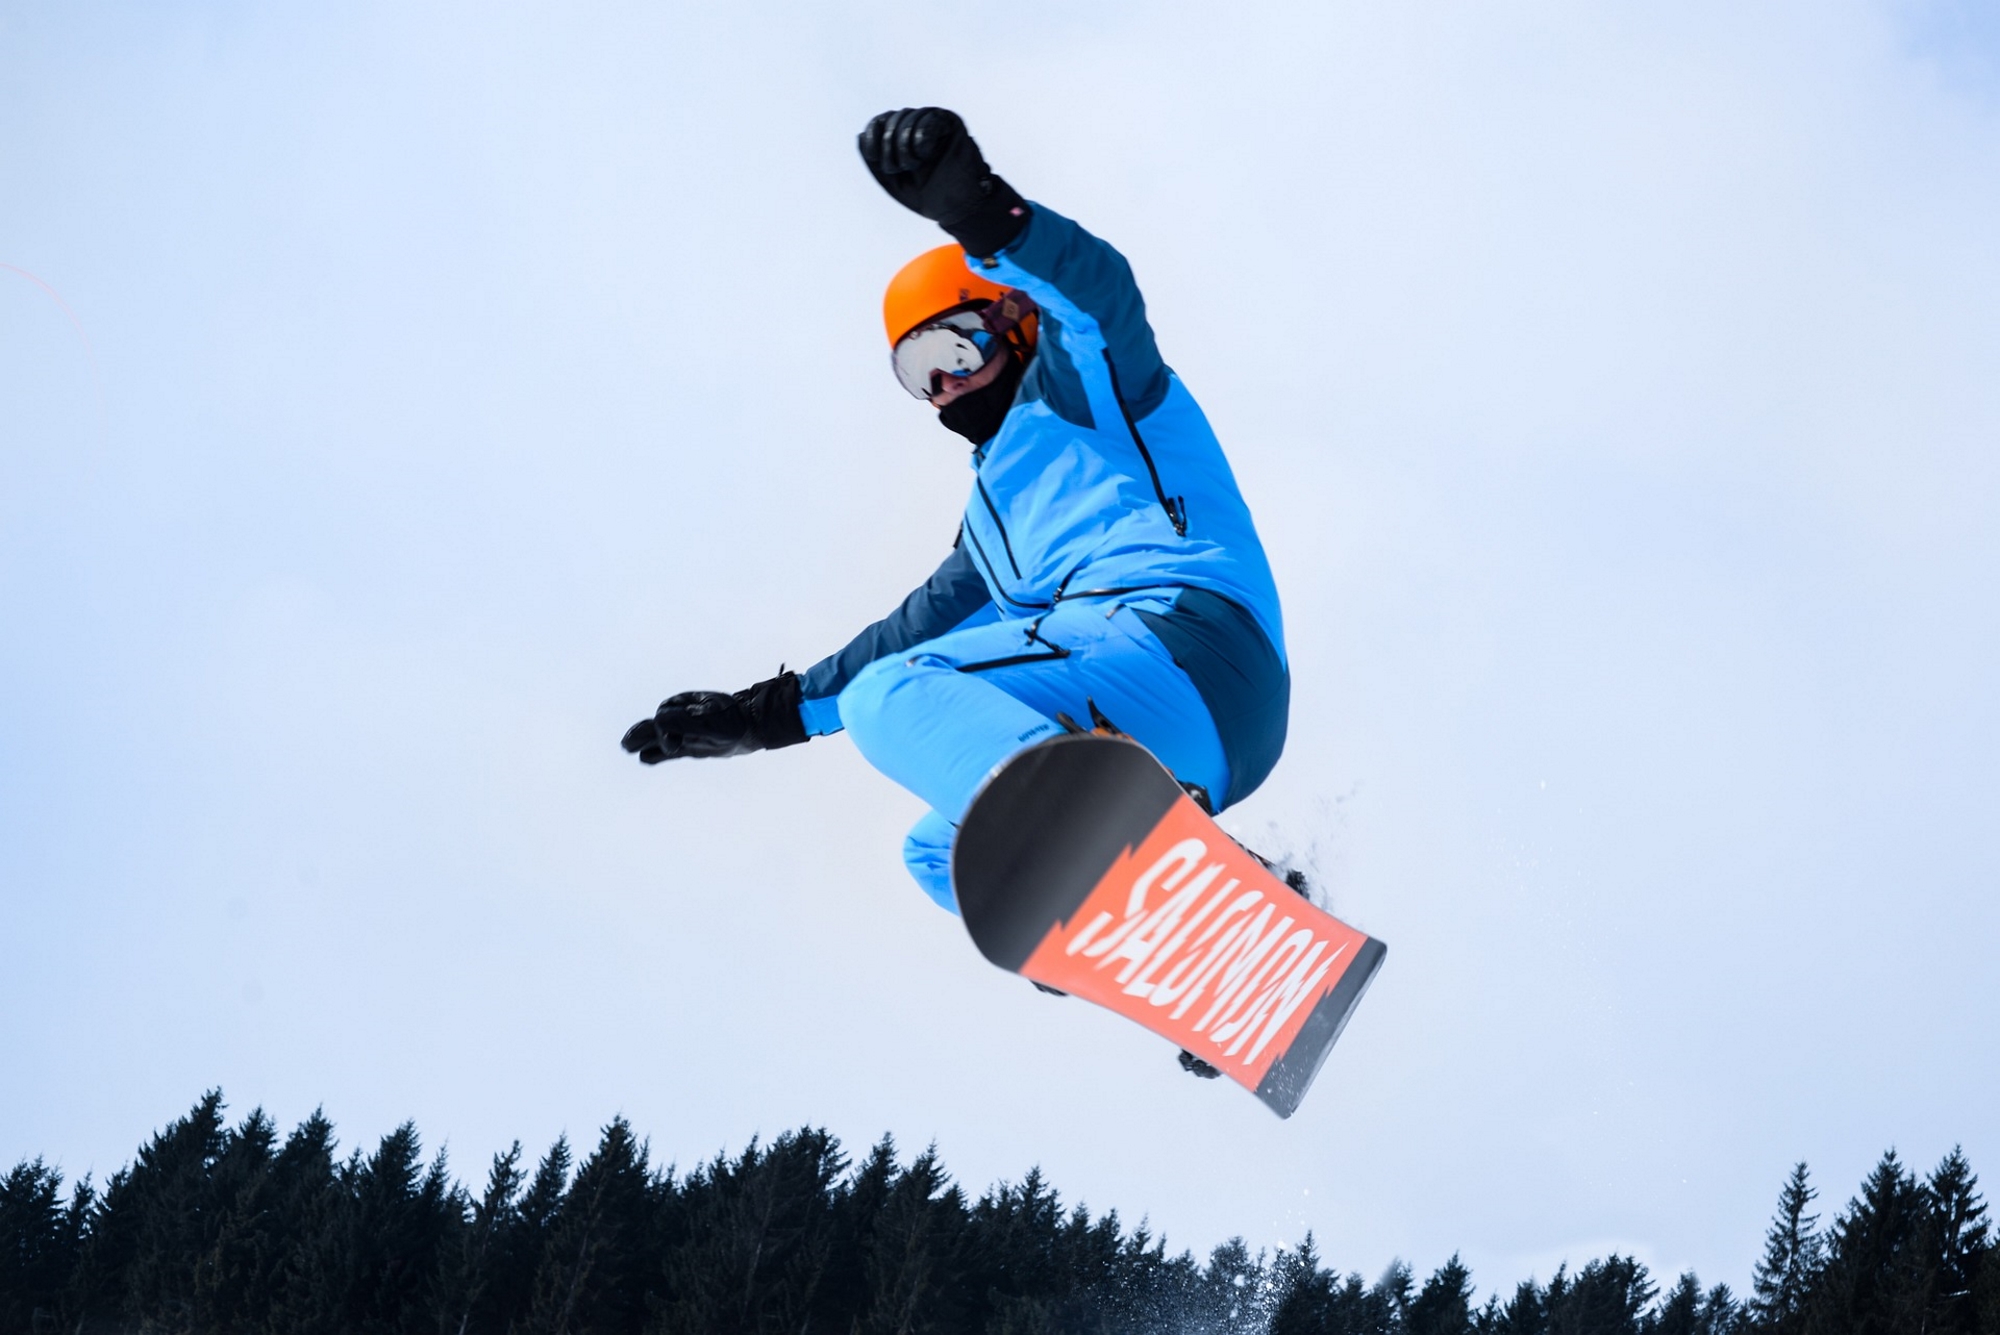 Man on the slopes enjoying sport of snowboarding using a Salomon snowboard